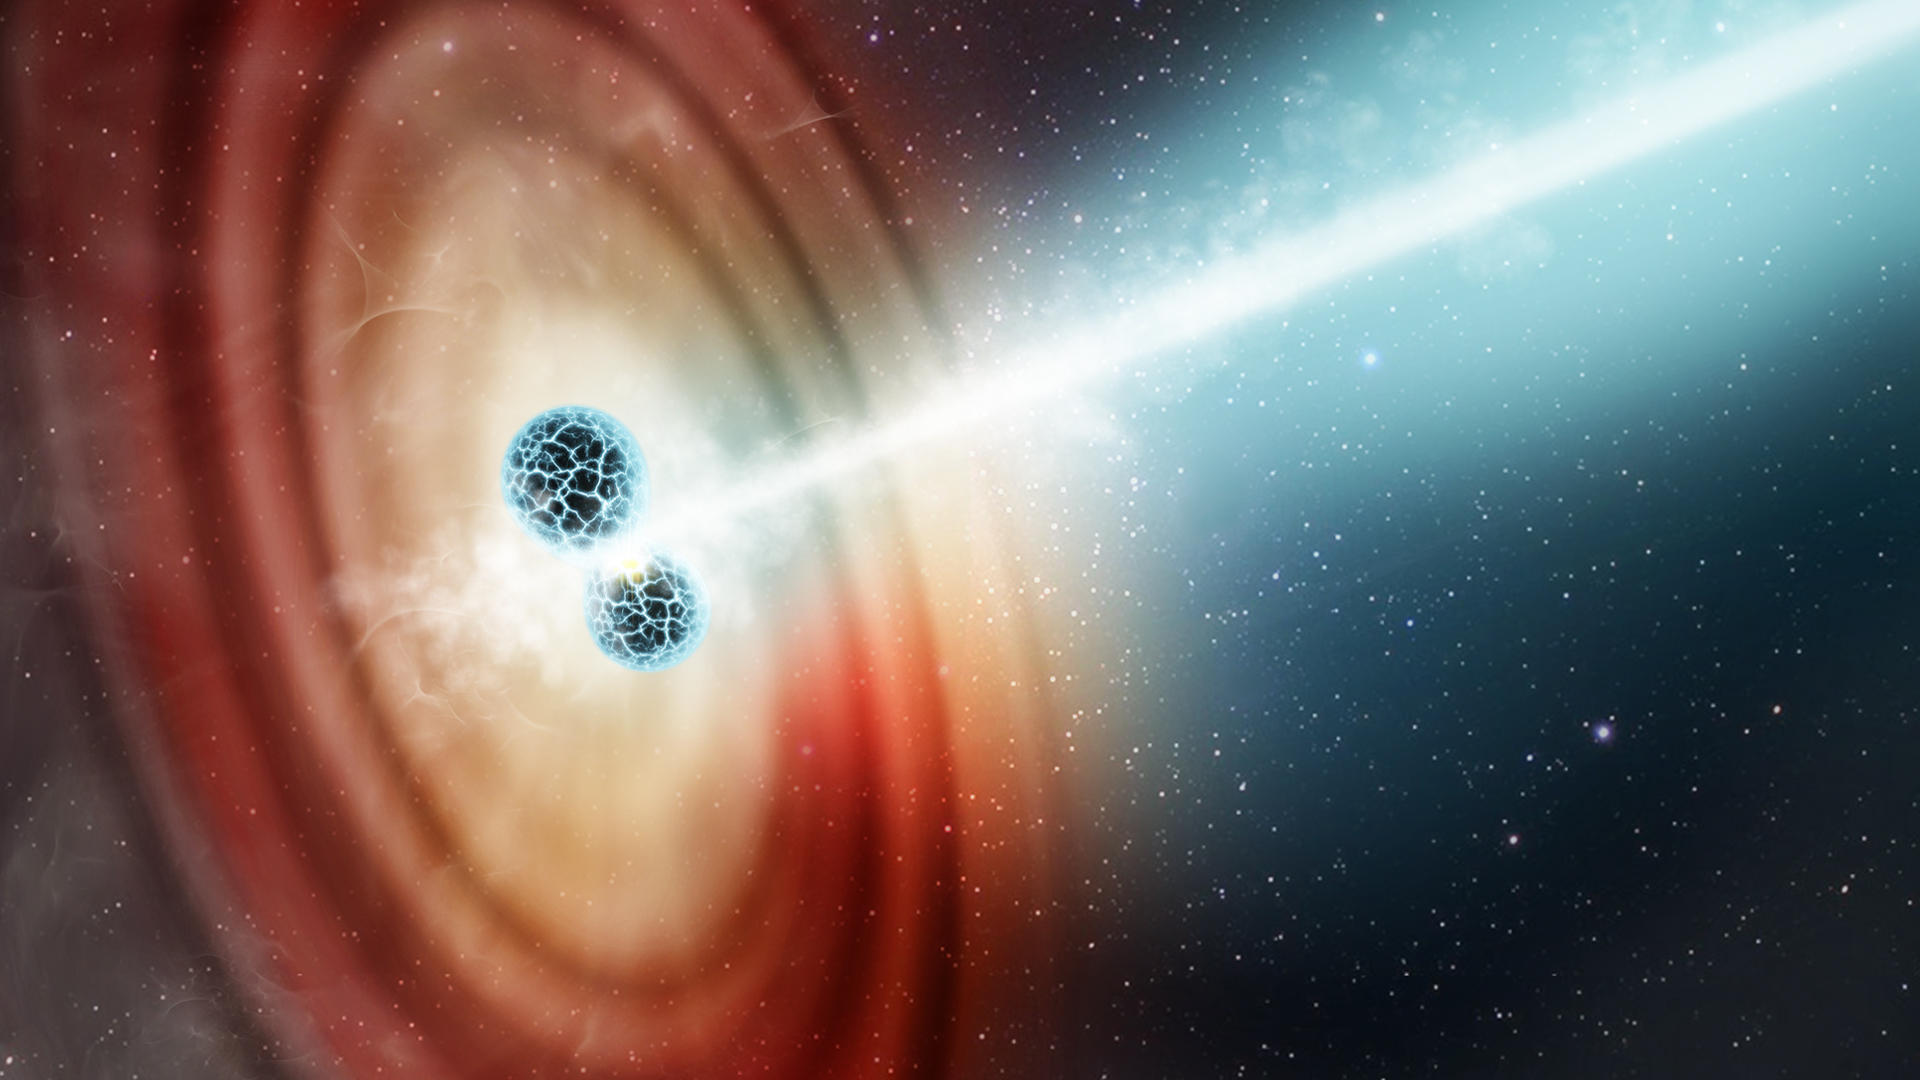 Two neutron stars collide